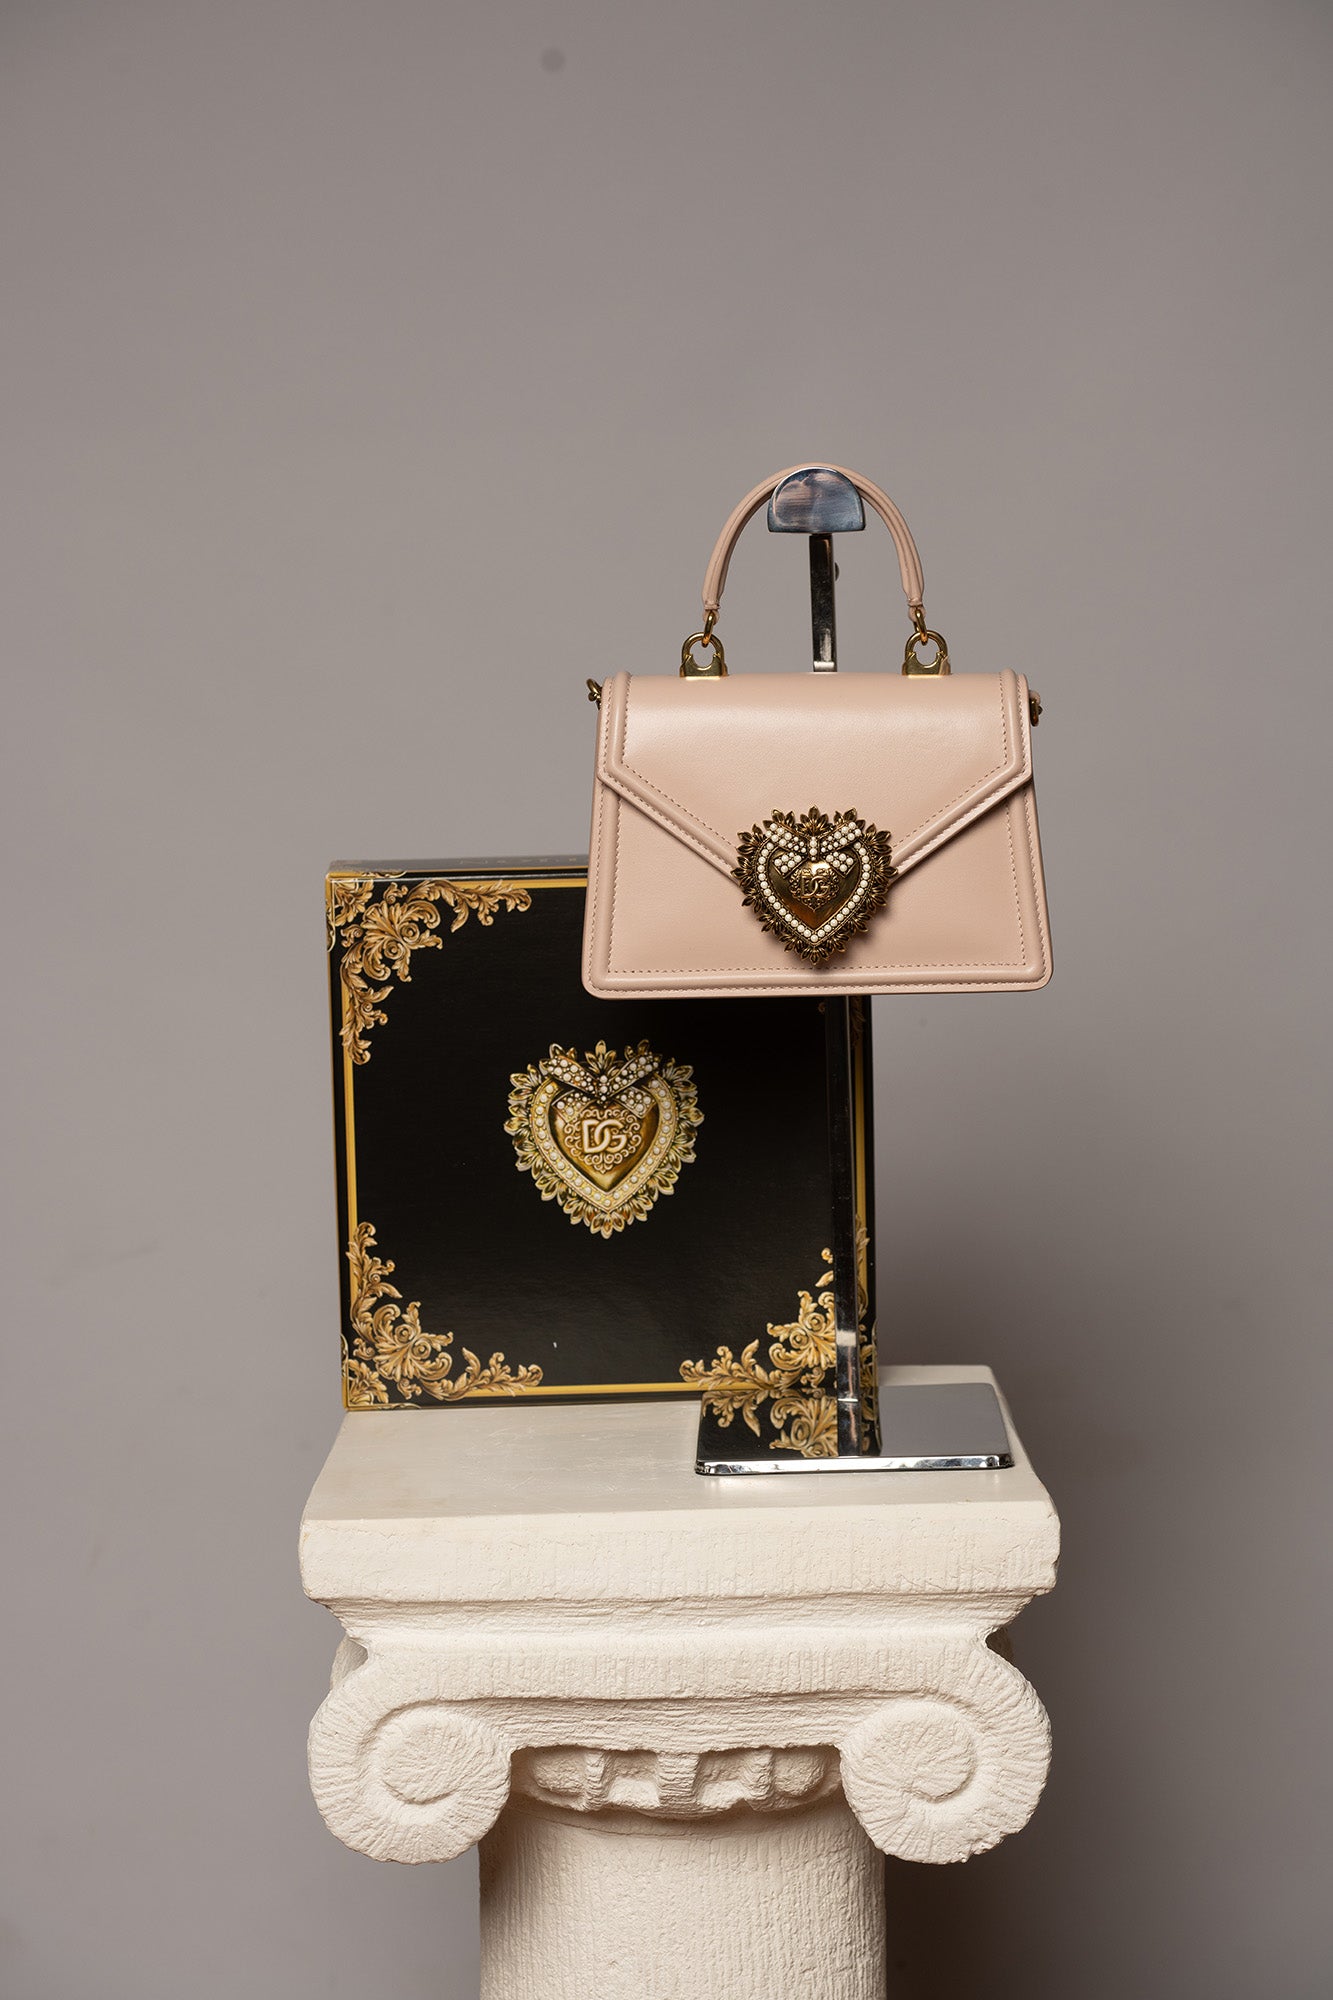 Dolce & Gabbana Small Devotion Bag